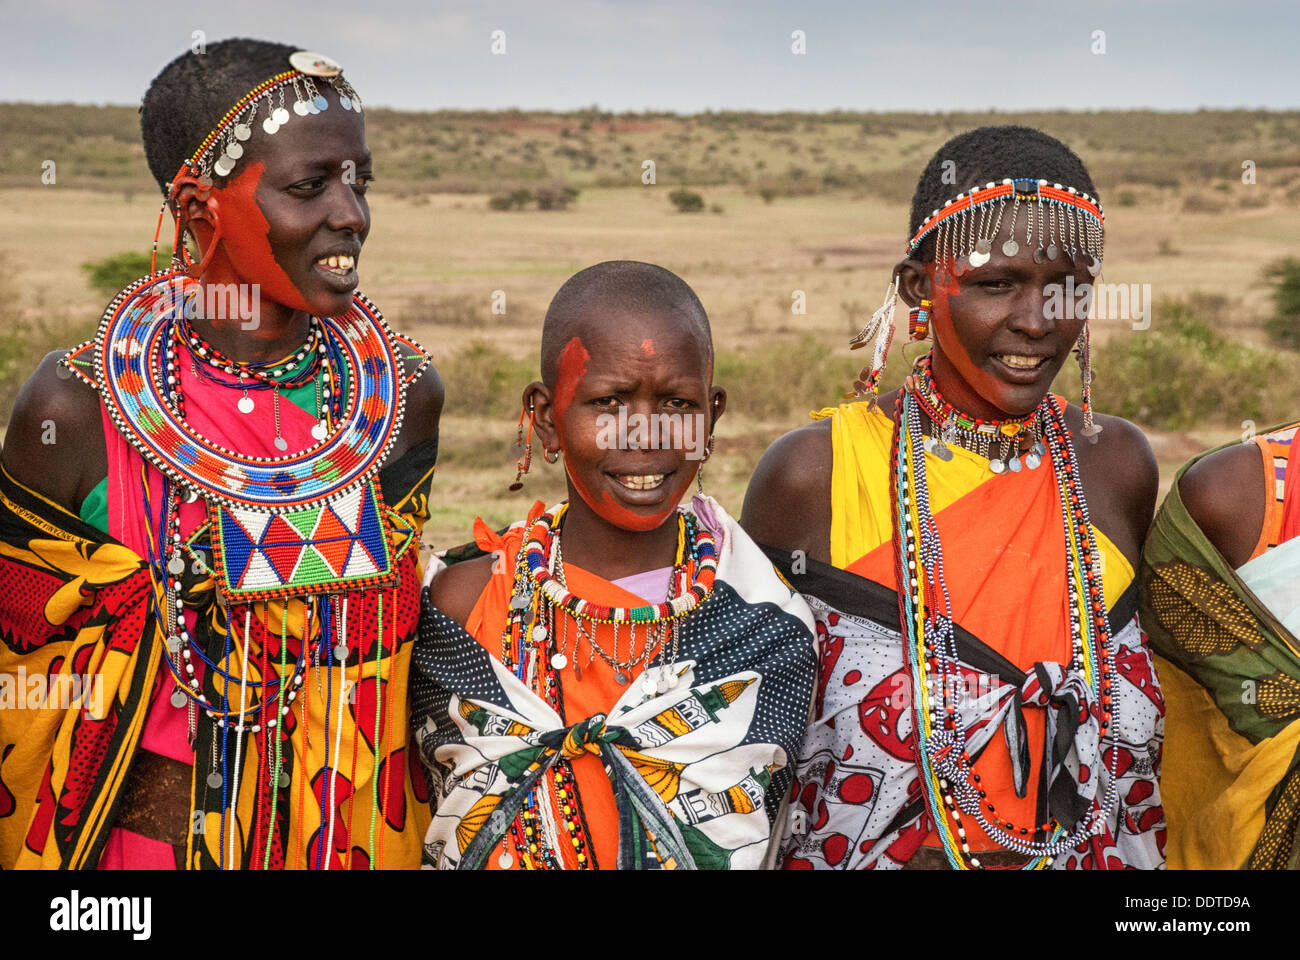 Masai women wearing colorful traditional dress, singing in a village near the Masai Mara, Kenya, Africa Stock Photo